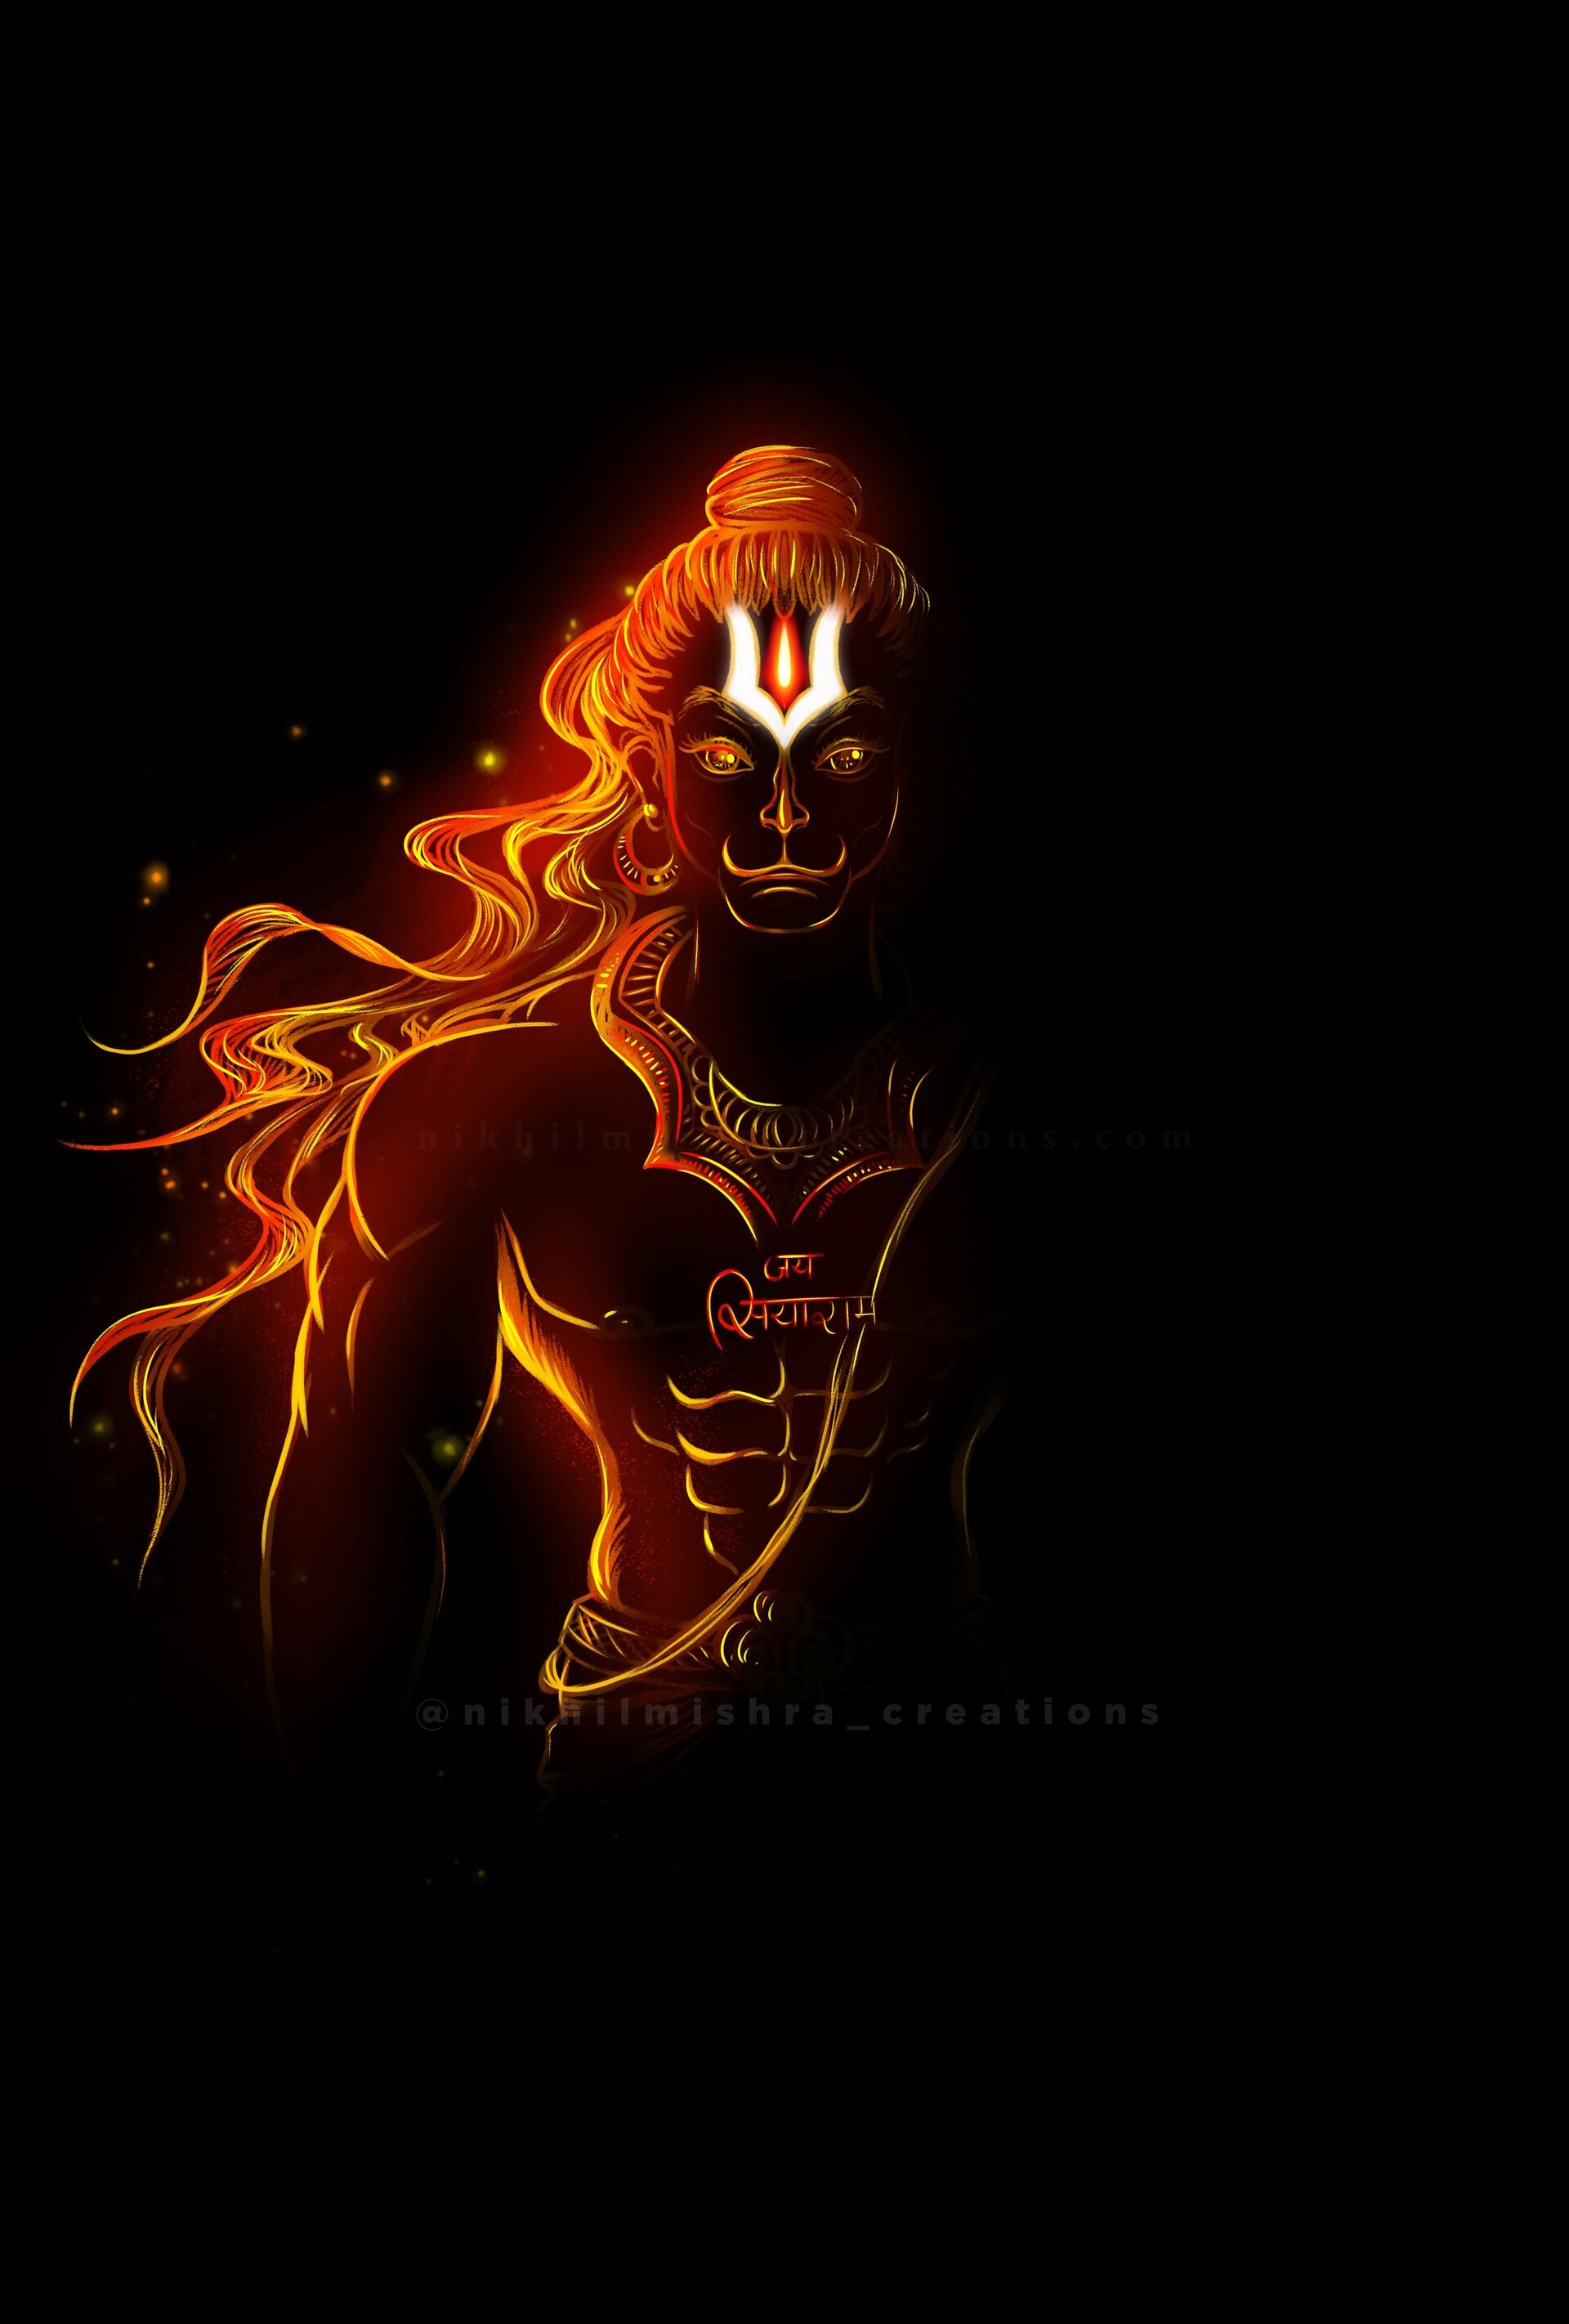 ArtStation - Hanuman ji digital artwork